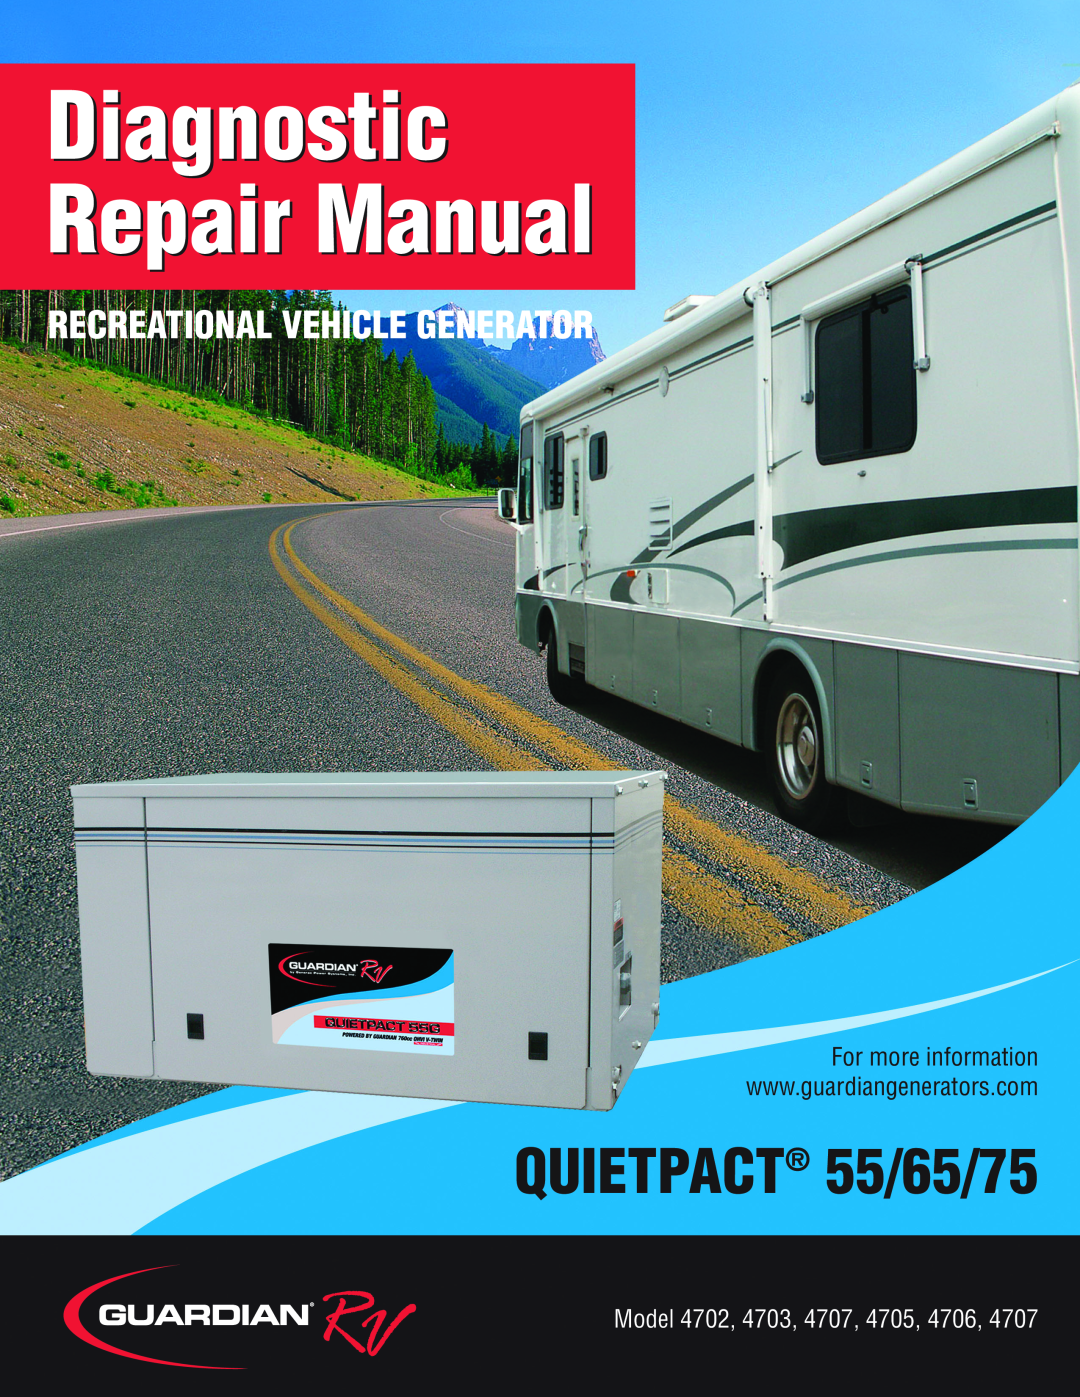 Generac Power Systems manual Diagnostic Repair Manual, QUIETPACT 55/65/75, Recreational Vehicle Generator 